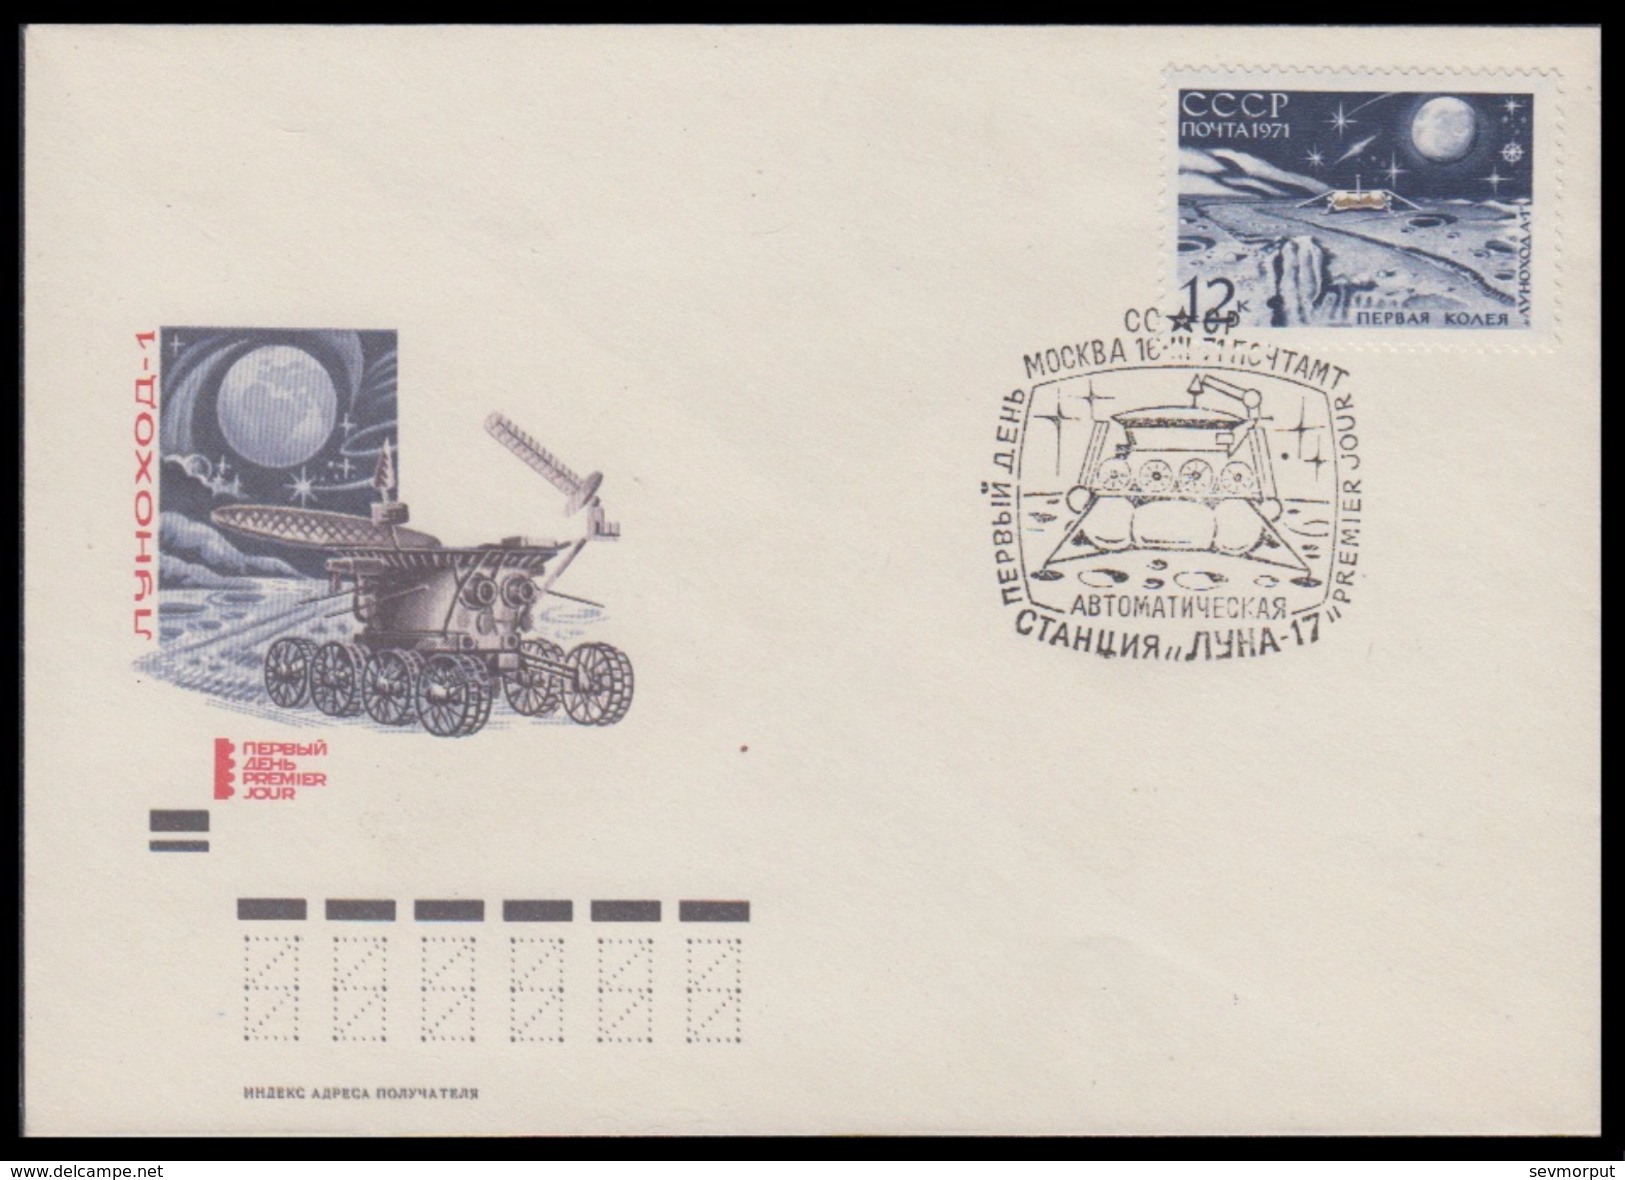 RUSSIA 1971 COVER Used FDC Set 5 SPACE ESPACE "LUNA-17" AUTOMATIC MOON STATION LUNOKHOD RADIO TELECOM LENIN USSR 3906-13 - Russia & USSR